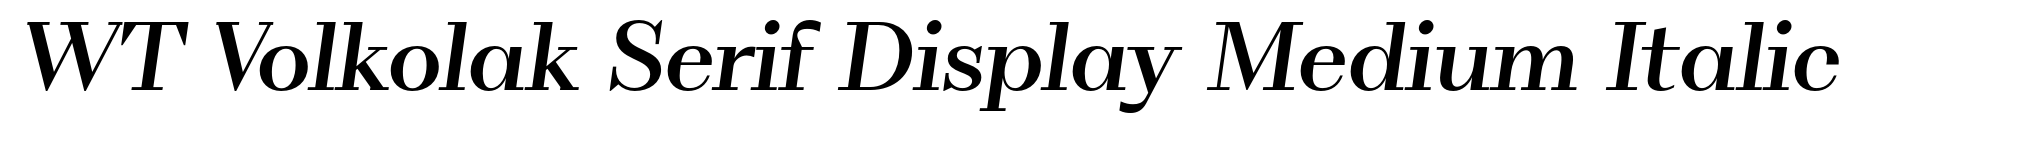 WT Volkolak Serif Display Medium Italic image